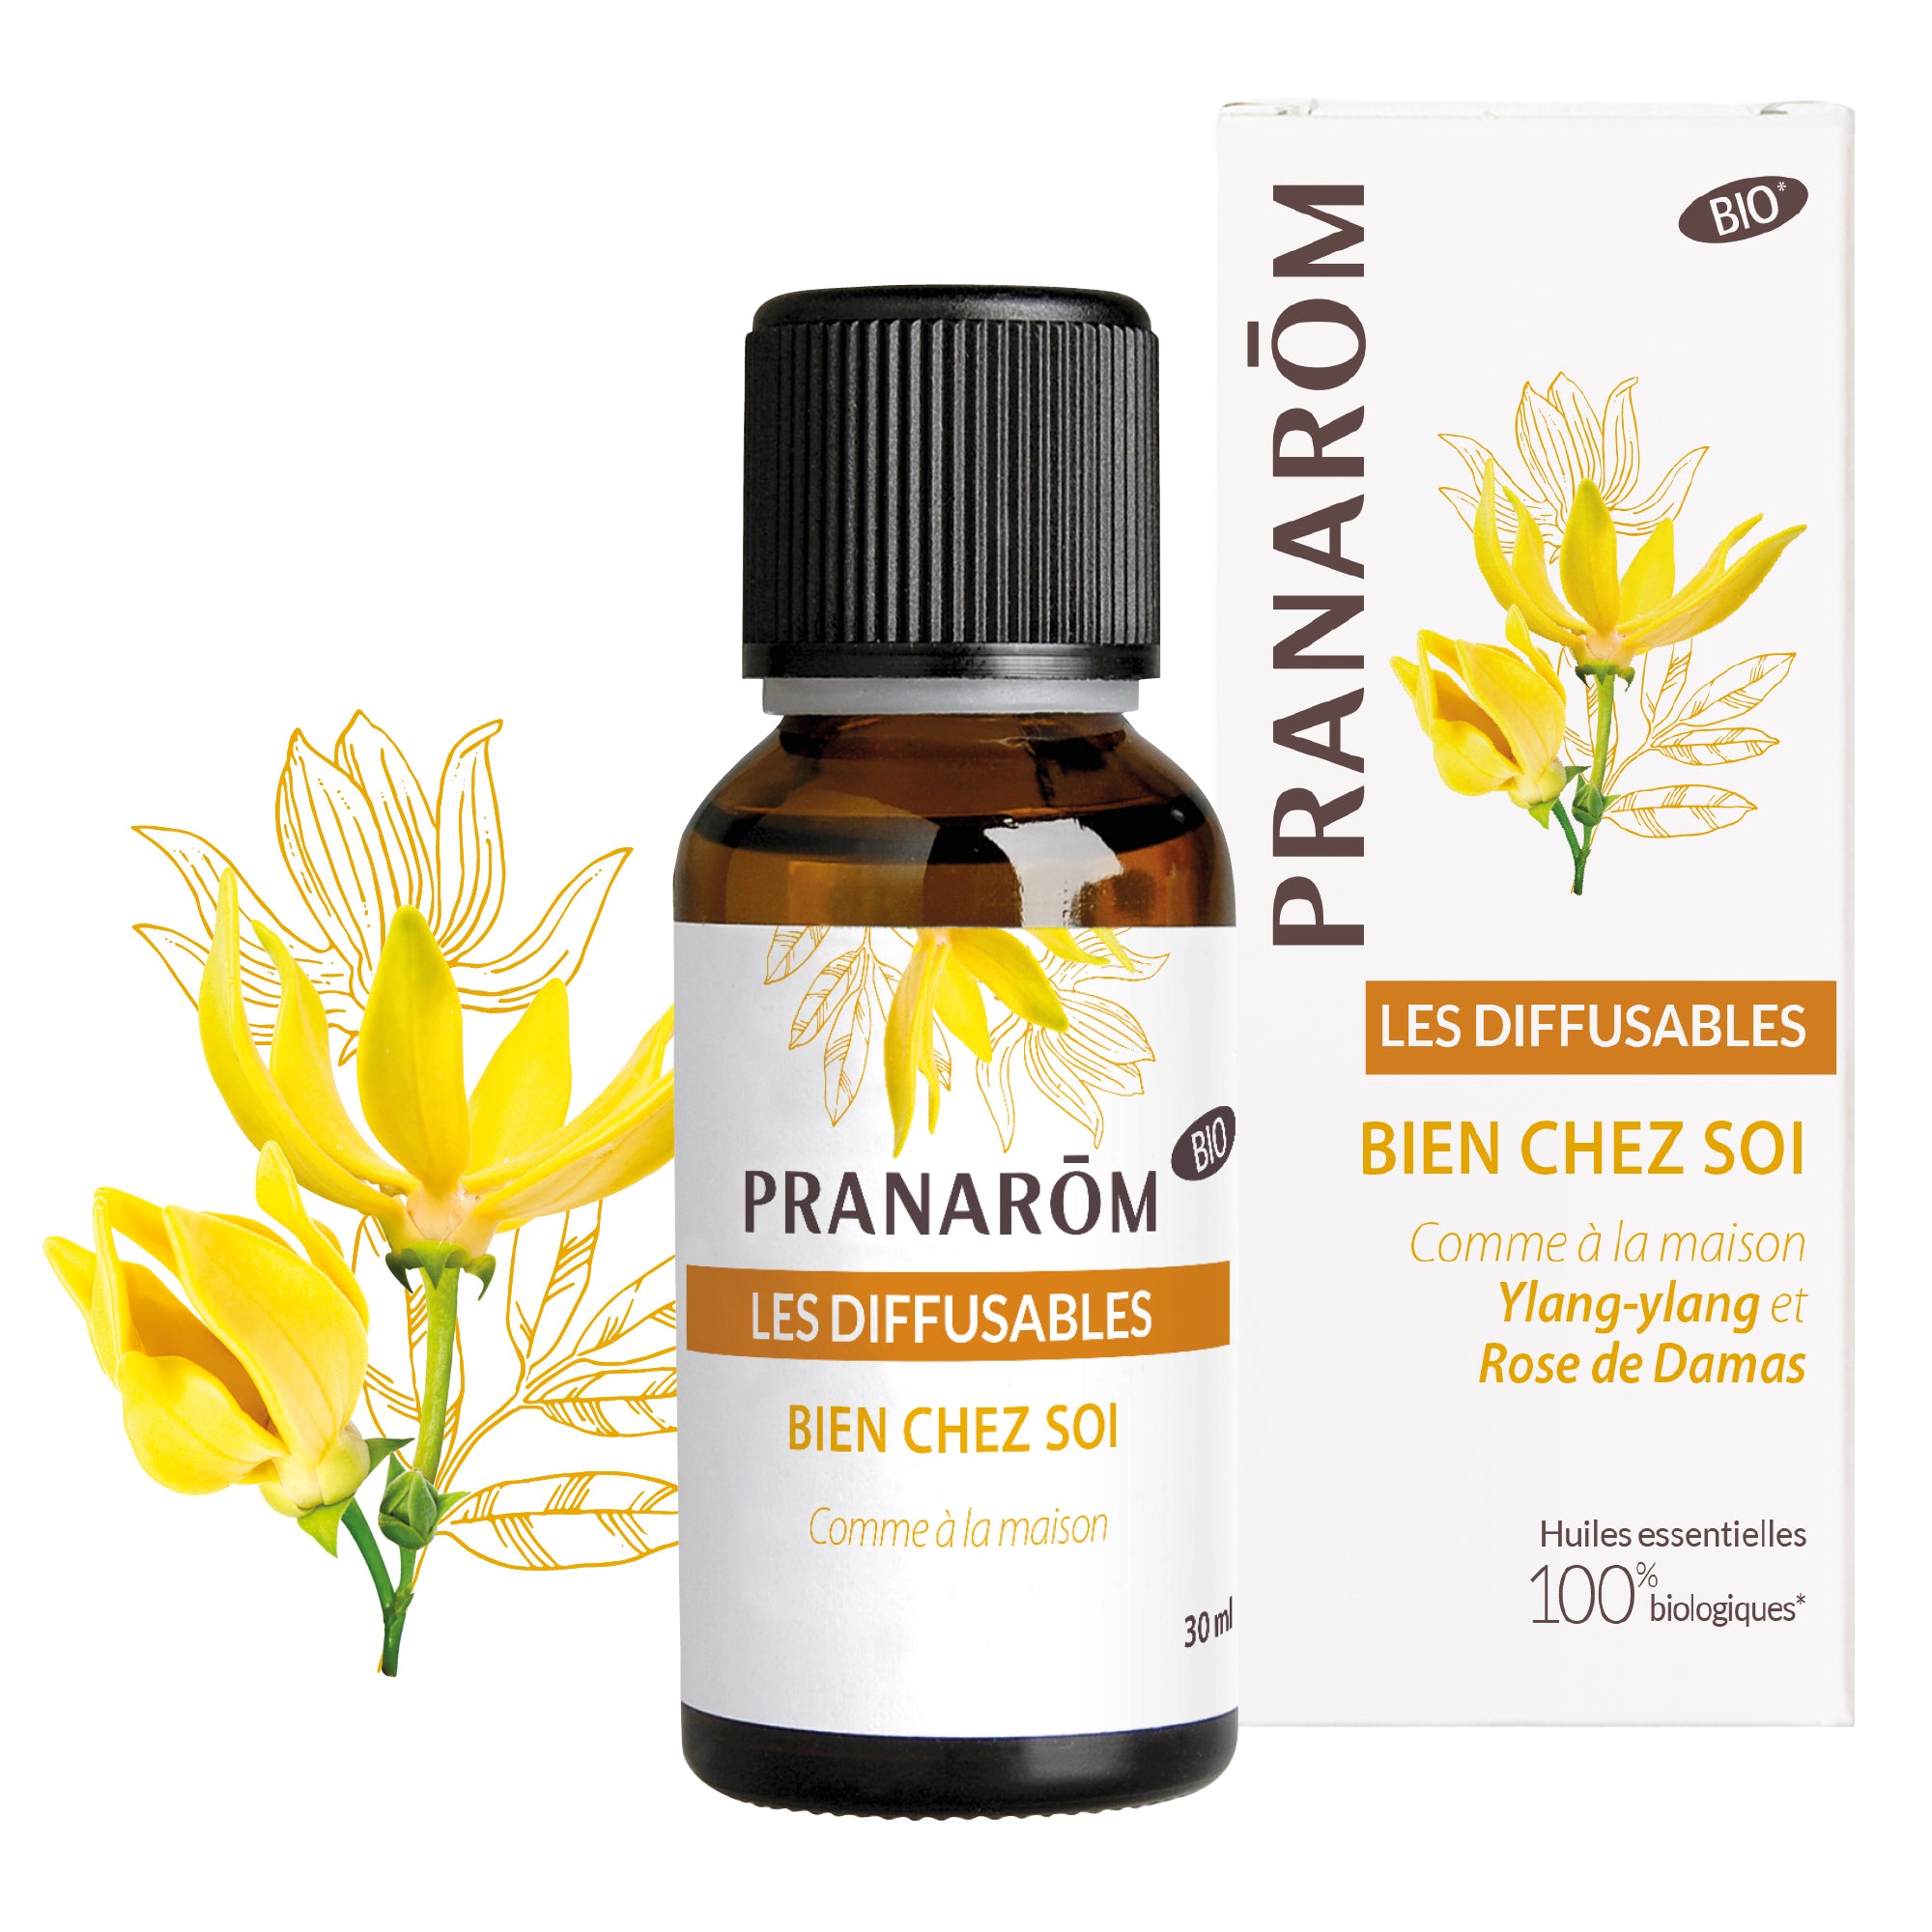 PRANAROM Joy Diffuseur d'huiles essentielles - Parapharmacie Prado Mermoz